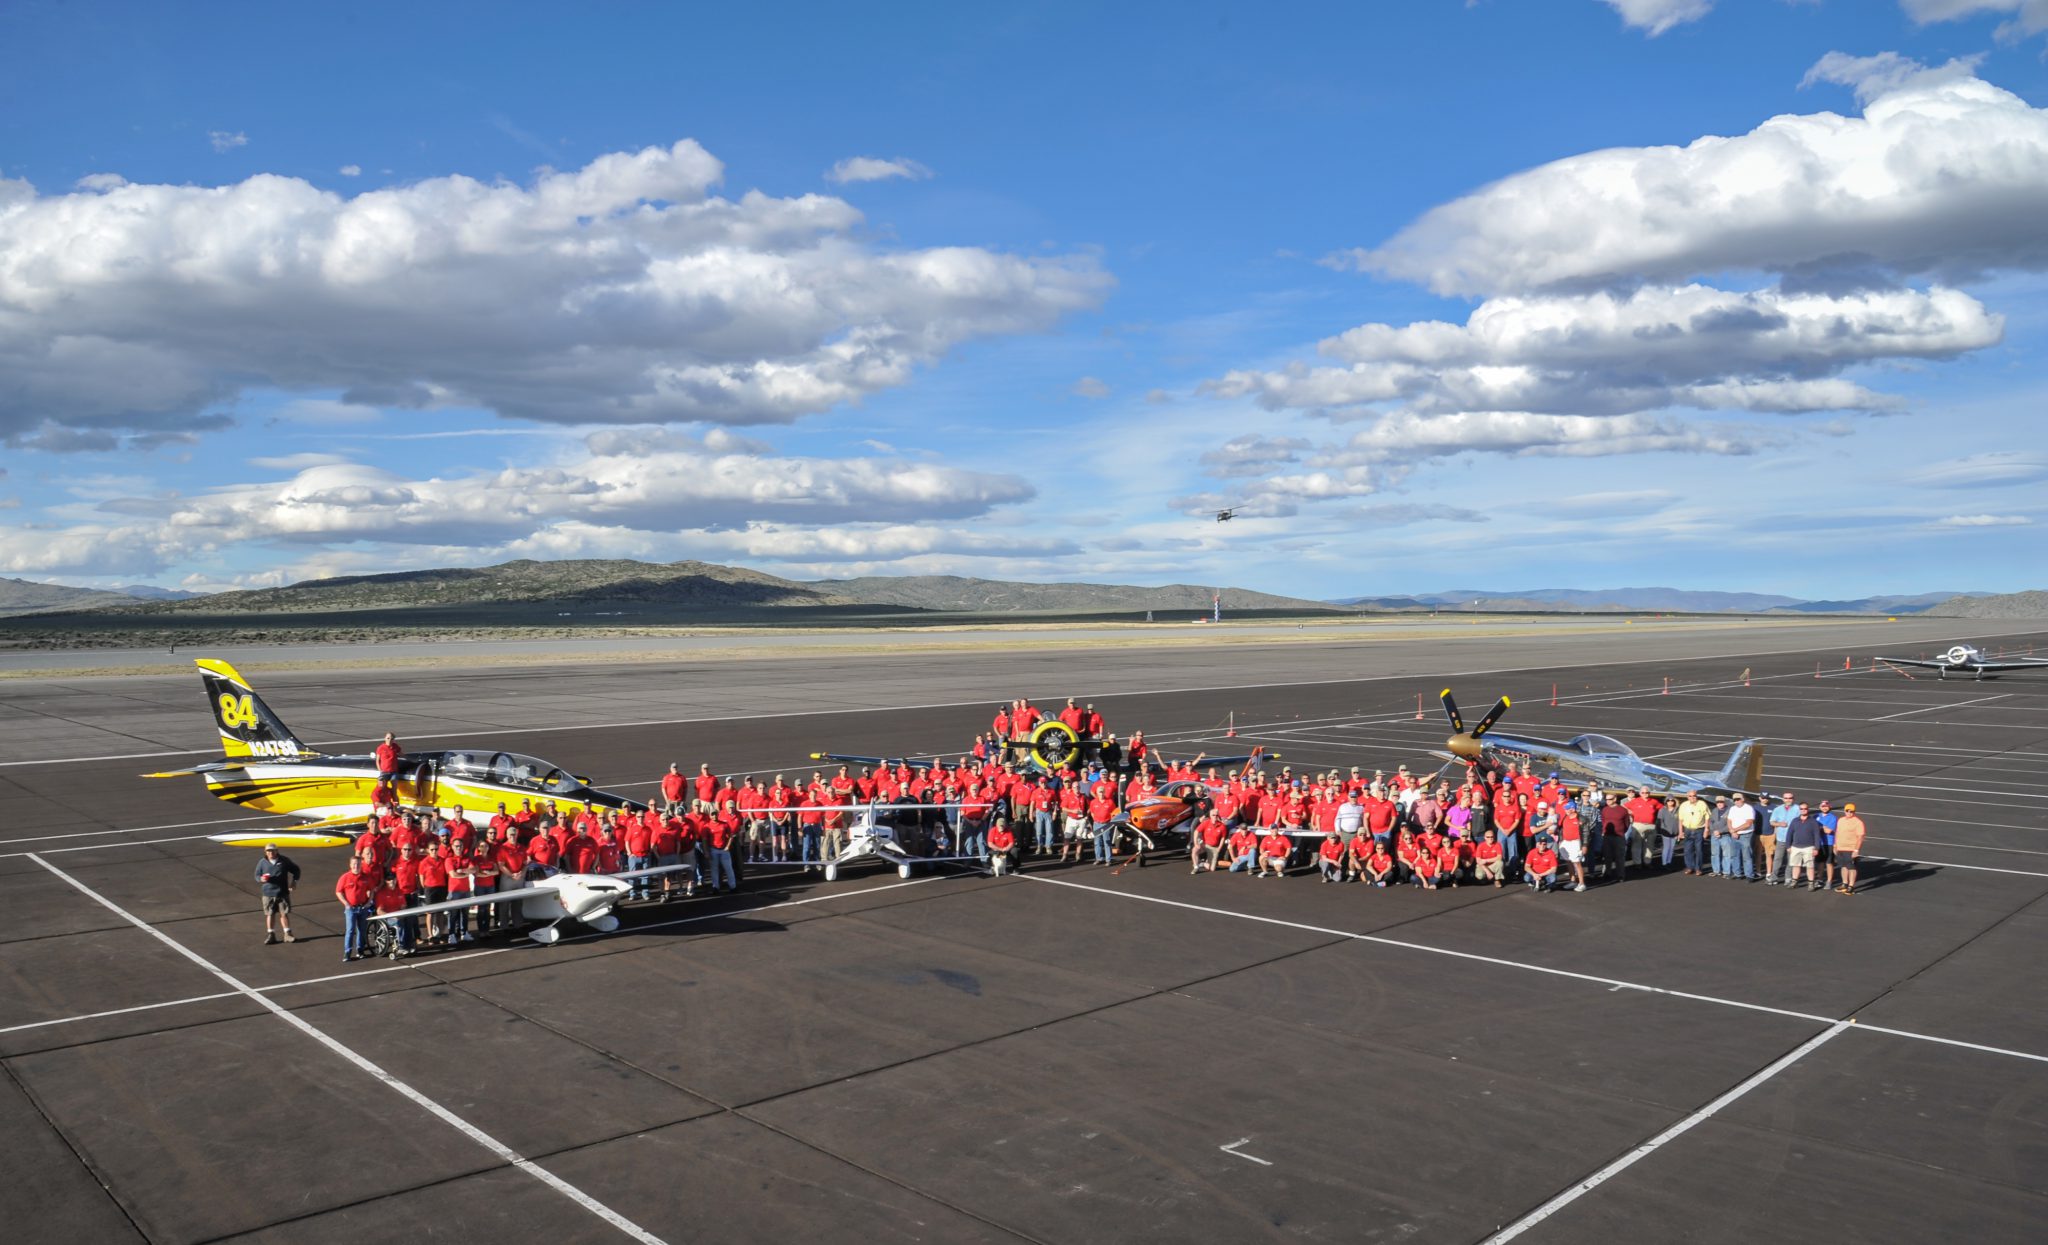 Pylon Racing Seminar Sees Largest, Most Diverse Class